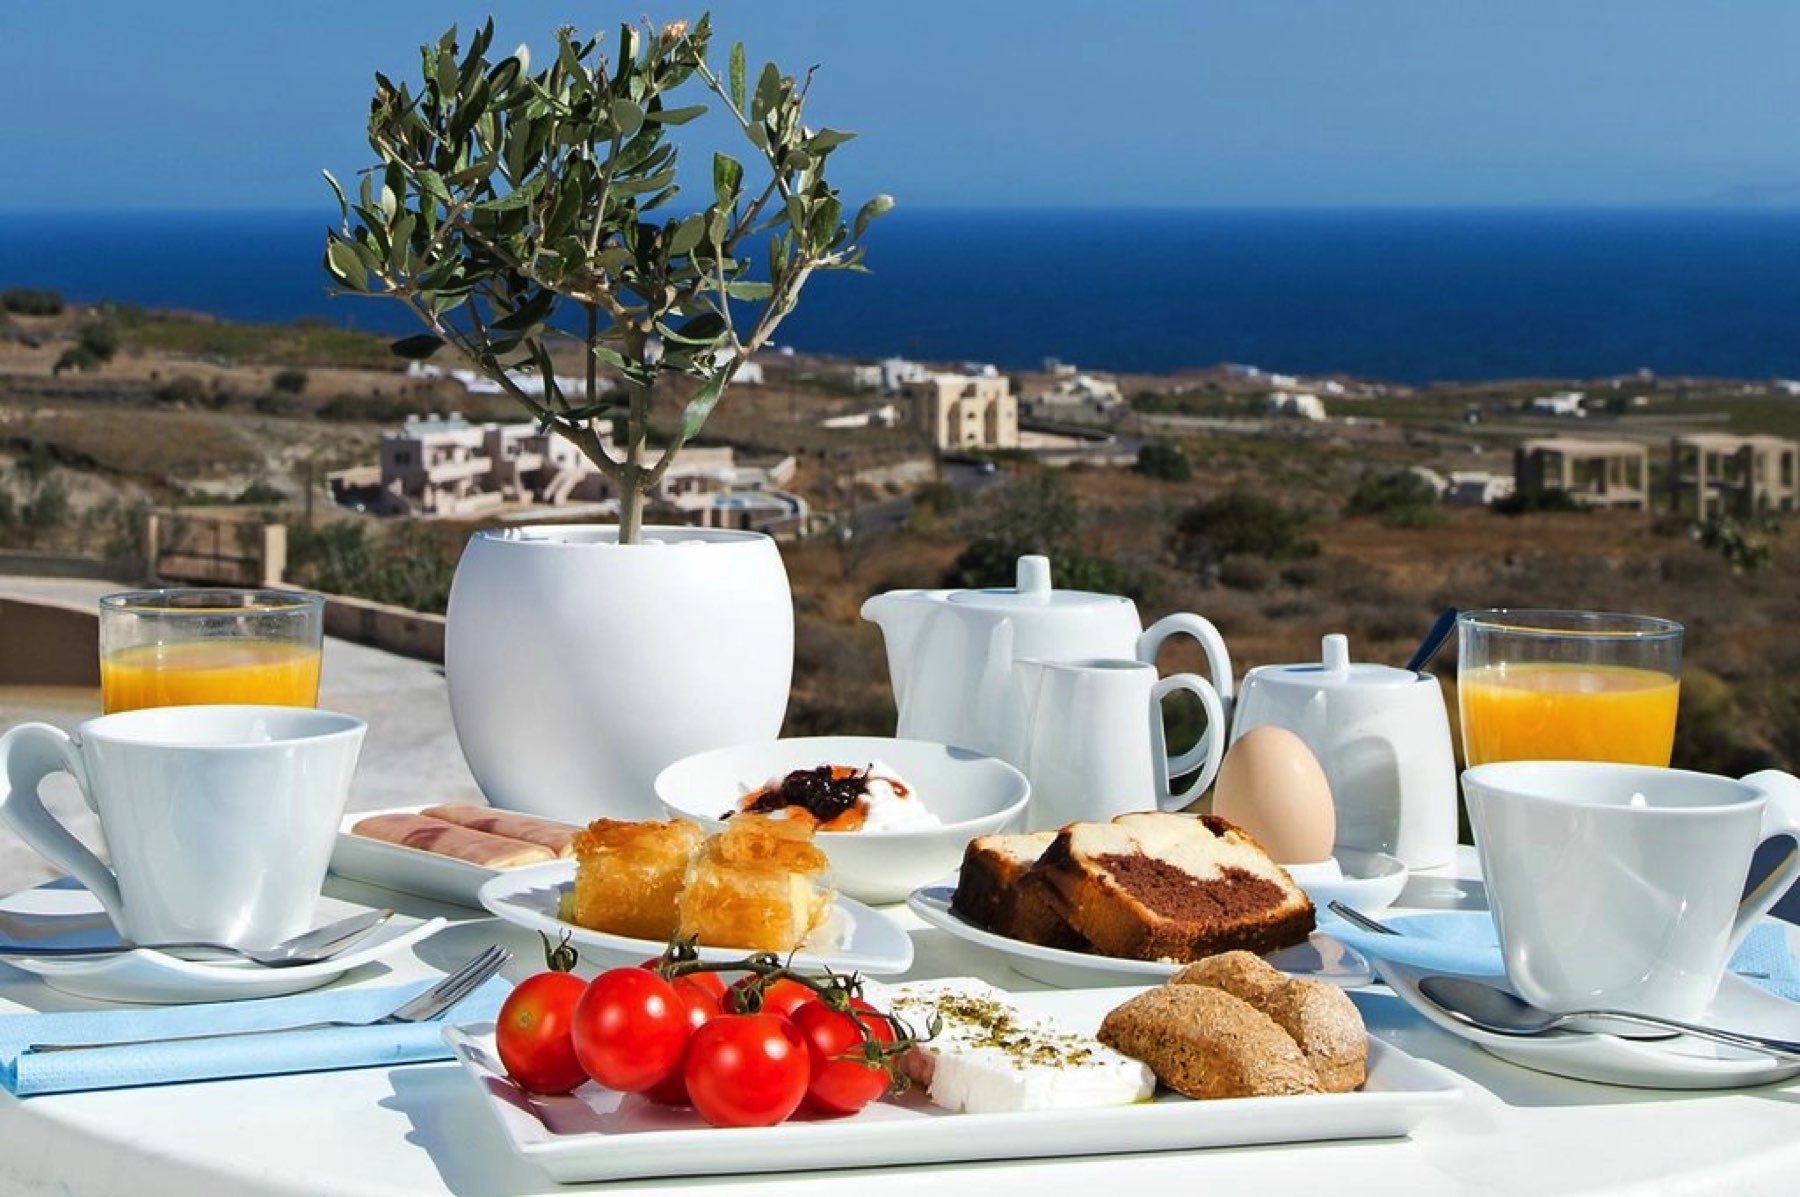 Добрый на греческом. Утро на Санторини. Завтрак в Греции. Греческий завтрак. Завтрак у моря Греция.